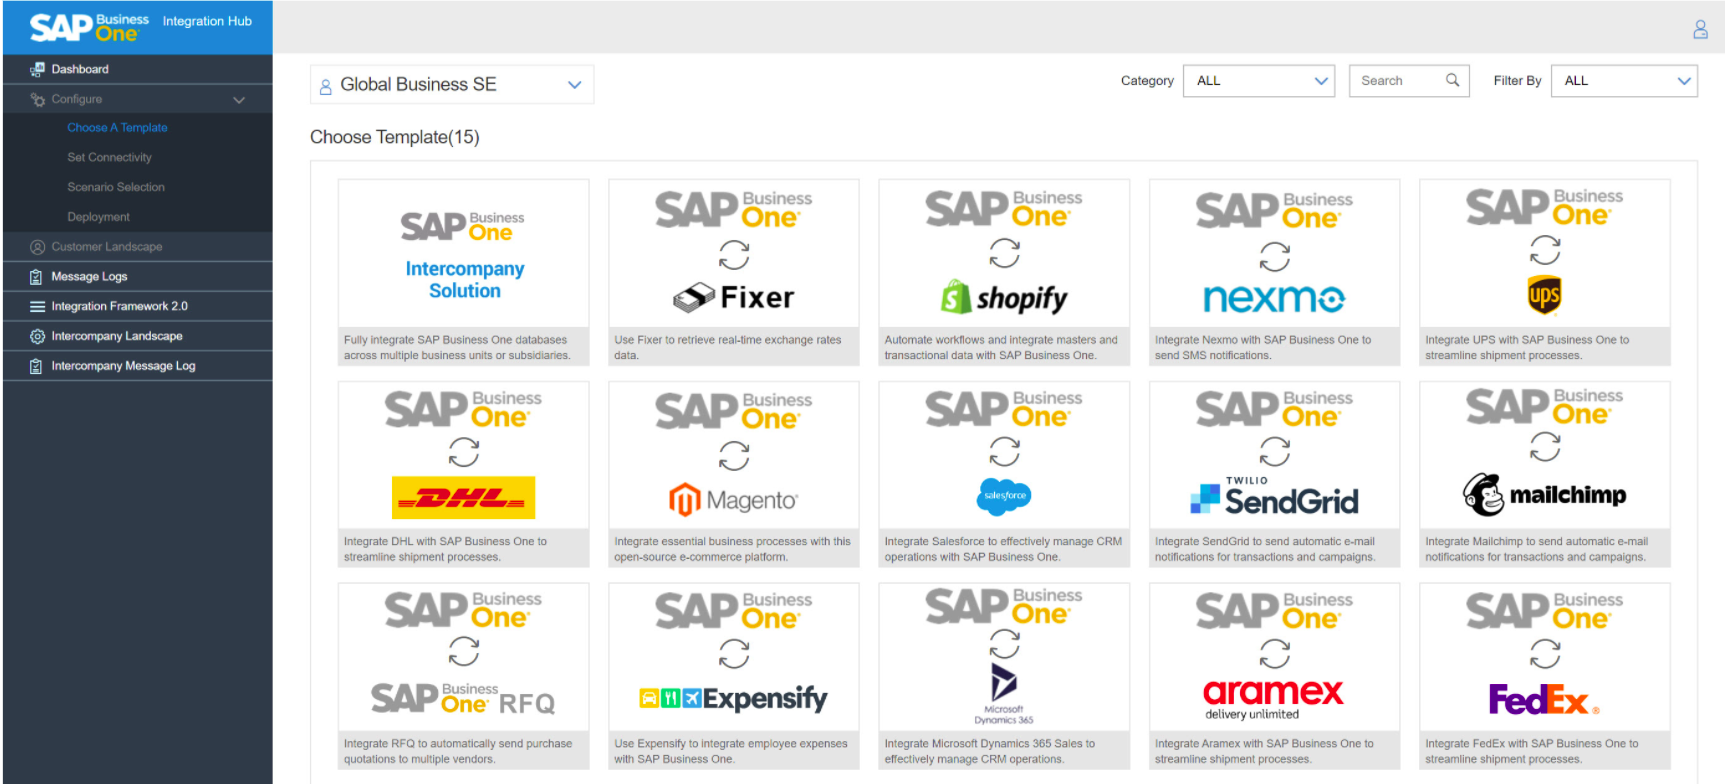 SAP Business One integration hub